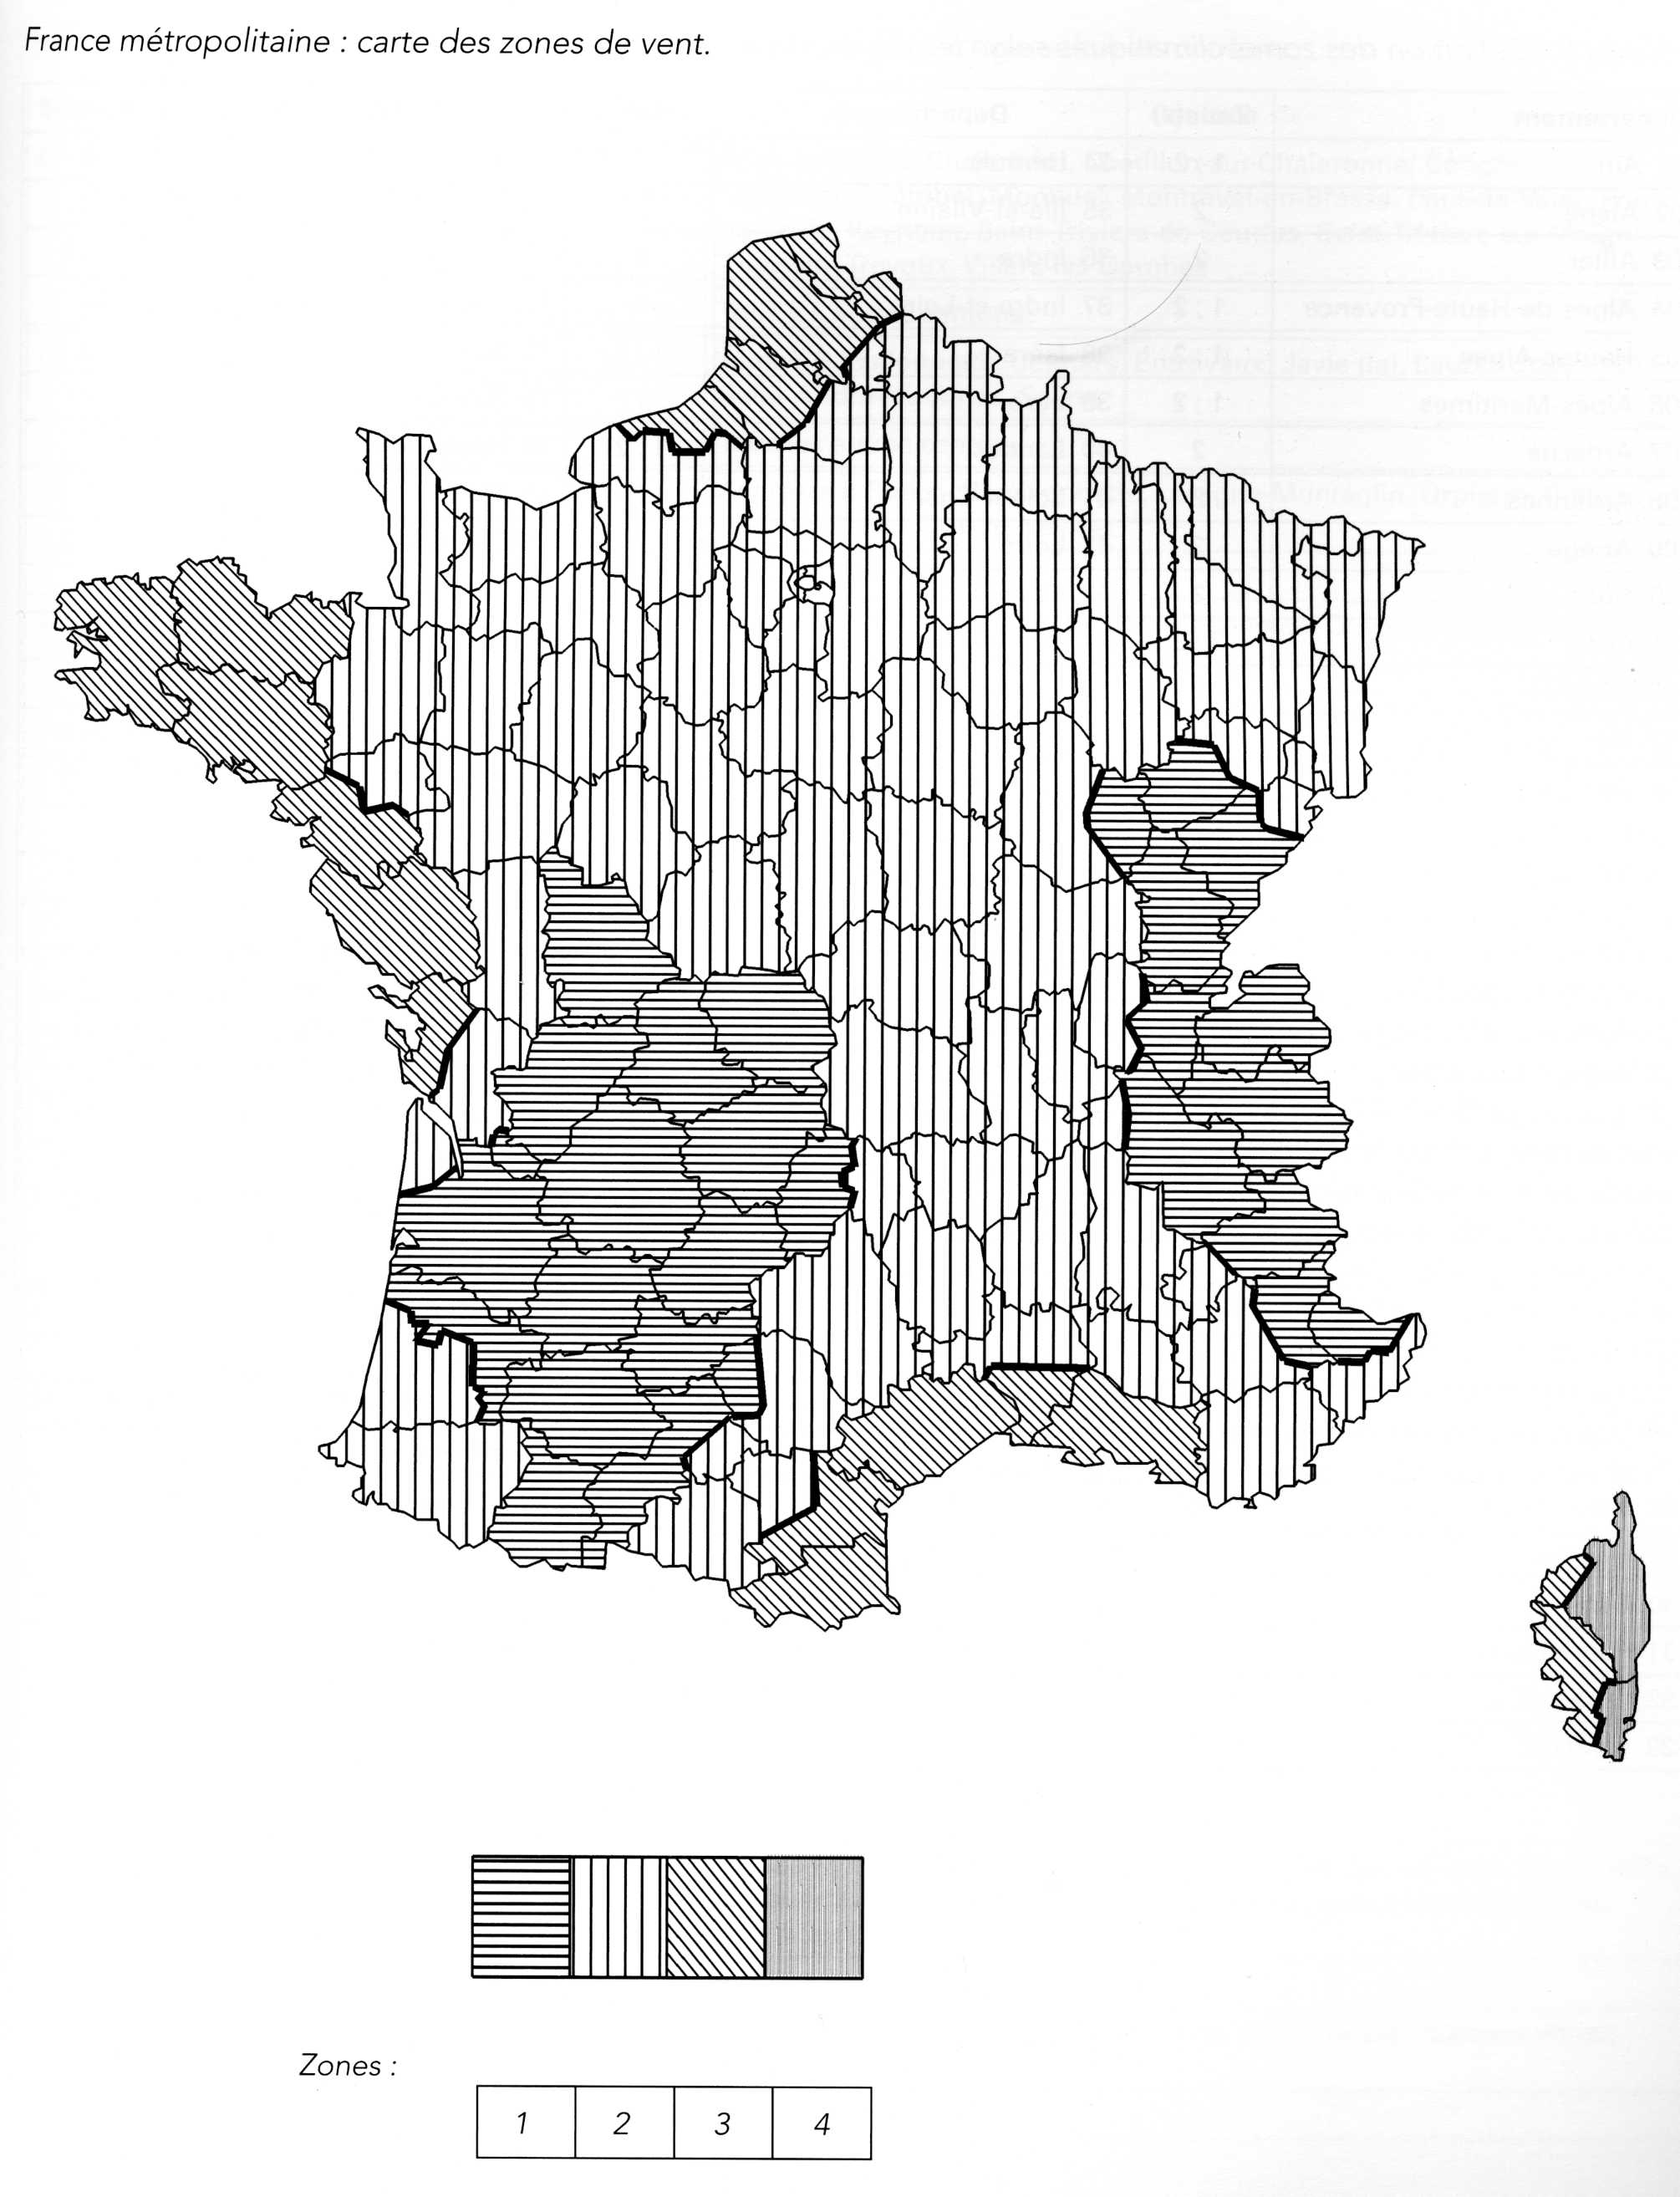 NV65 2009 zones de vent en France